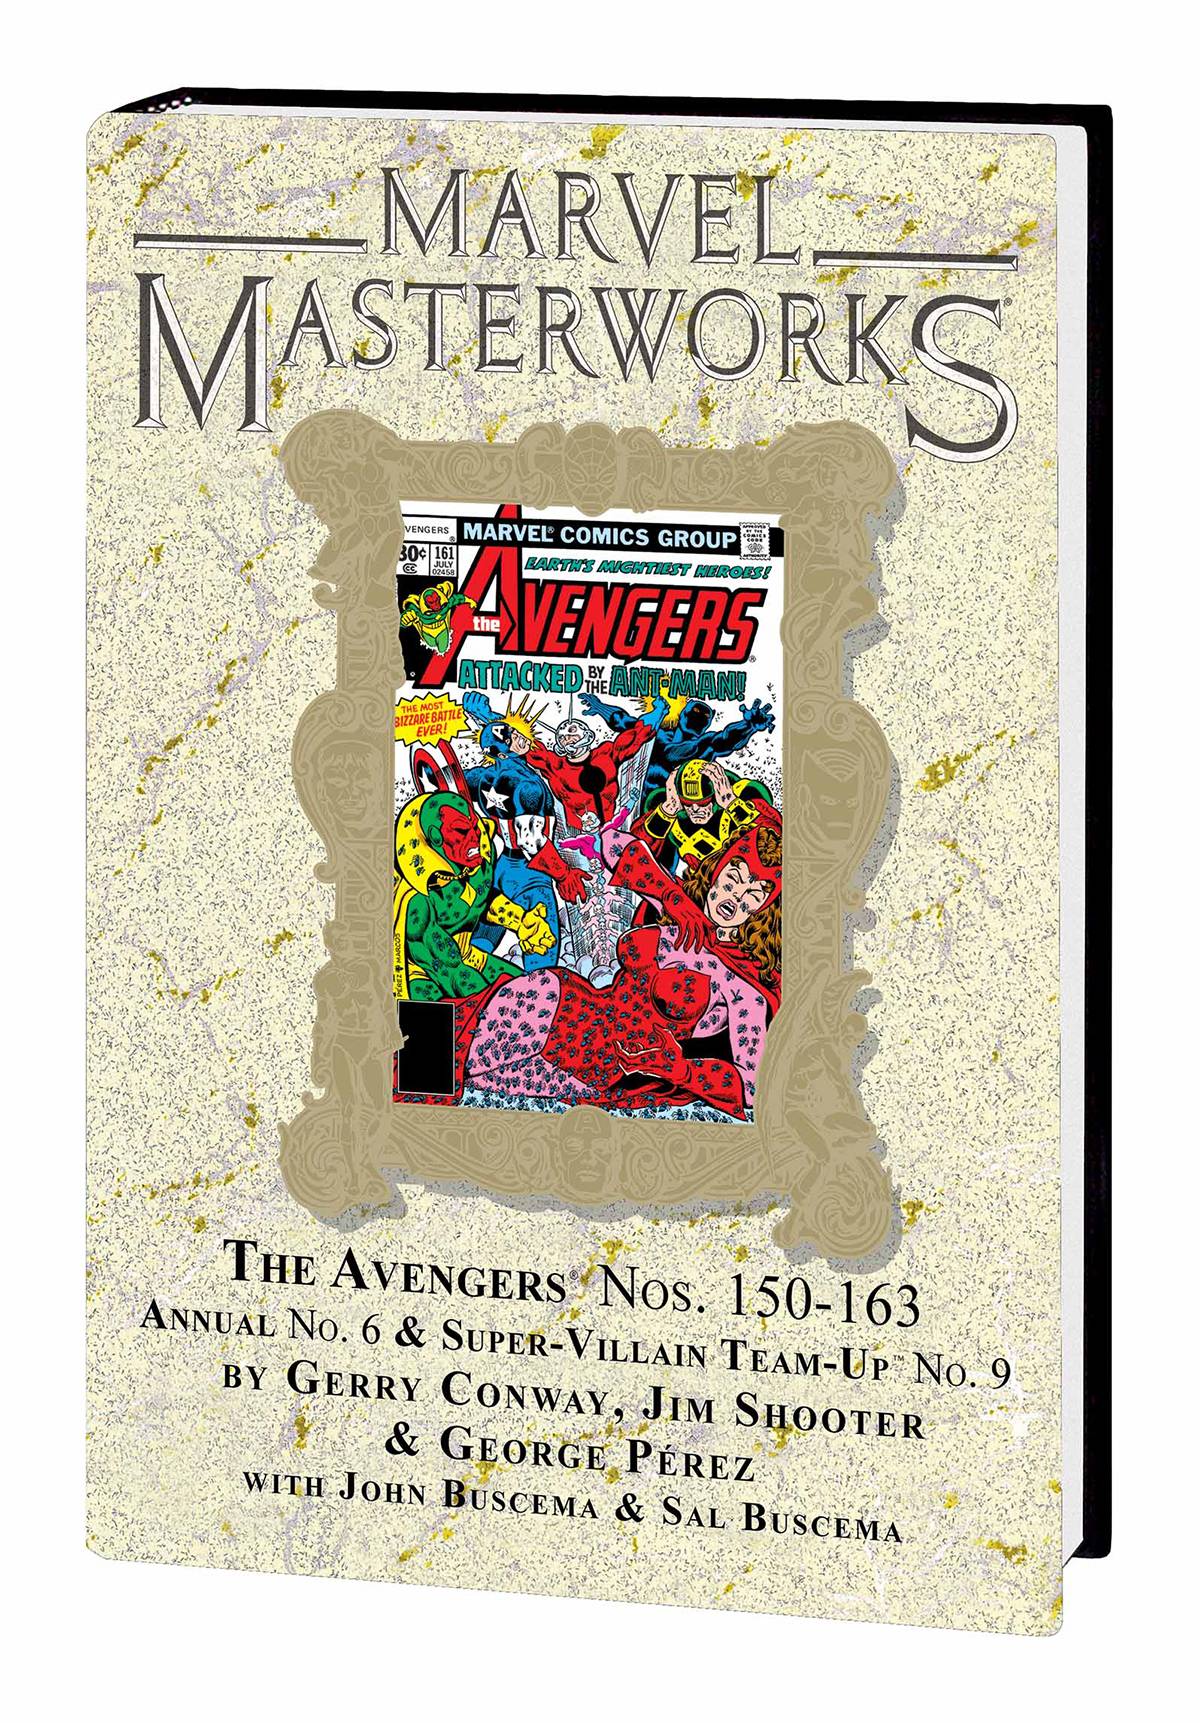 Marvel Masterworks Avengers Hardcover Volume 16 Direct Market Edition Edition 233